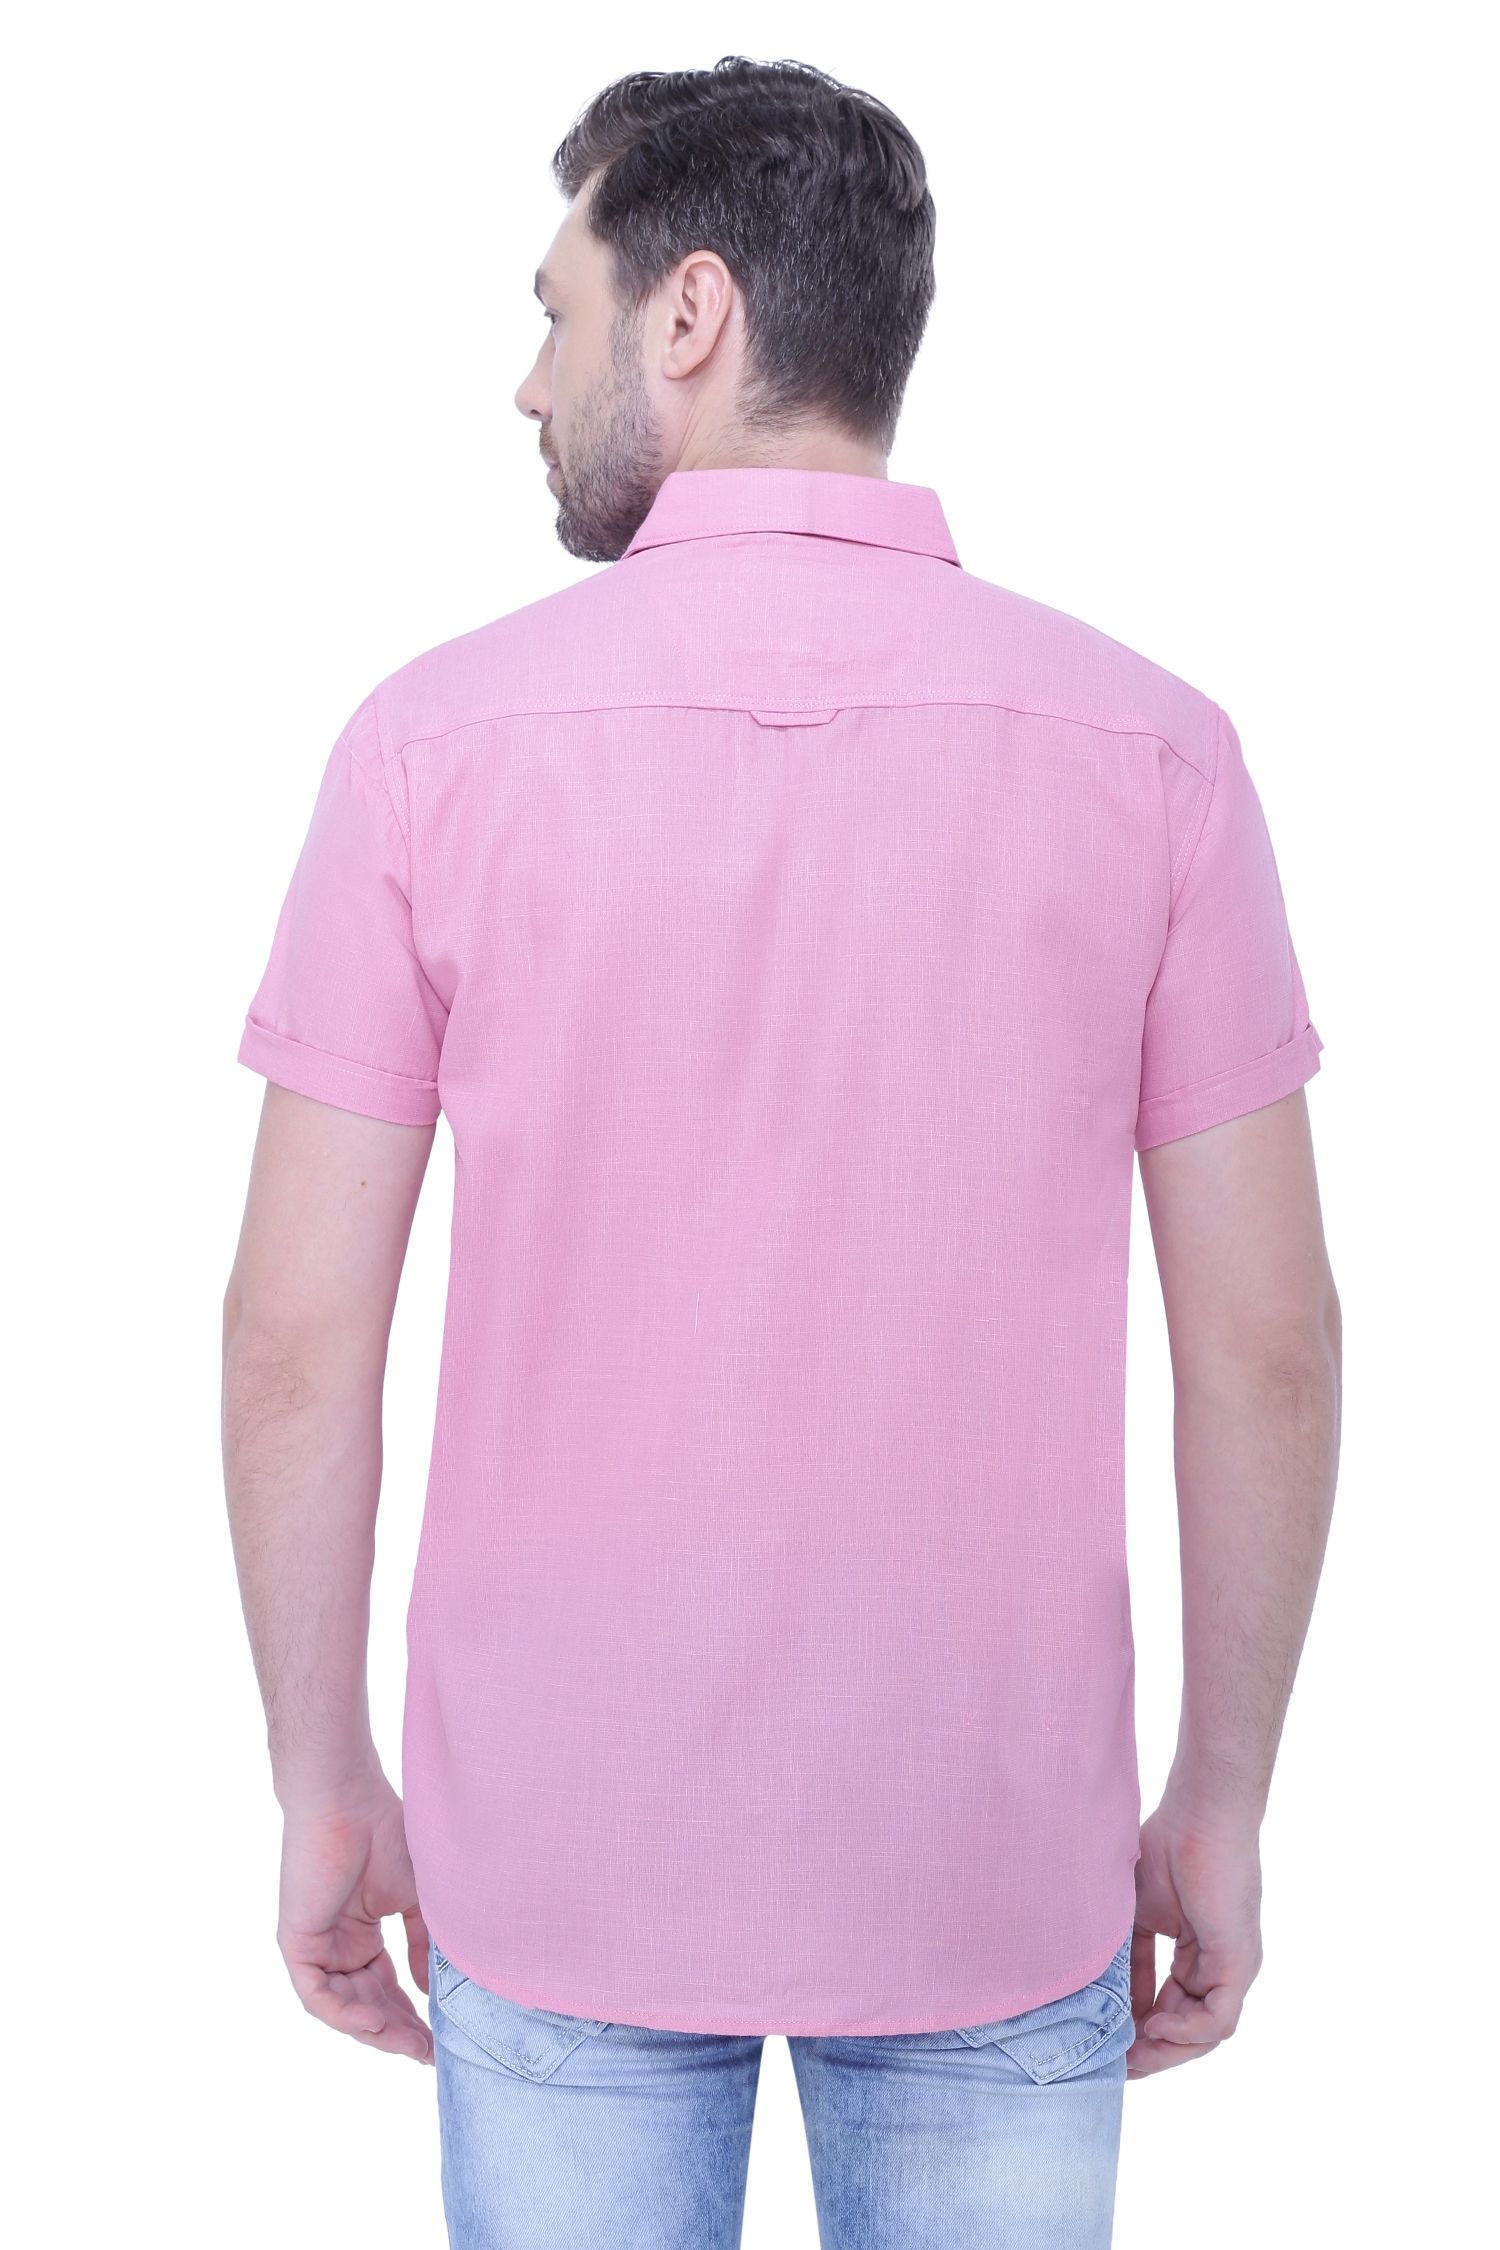 Kuons Avenue | Kuons Avenue Men's Linen Blend Half Sleeves Casual Shirt-KACLHS1232 2